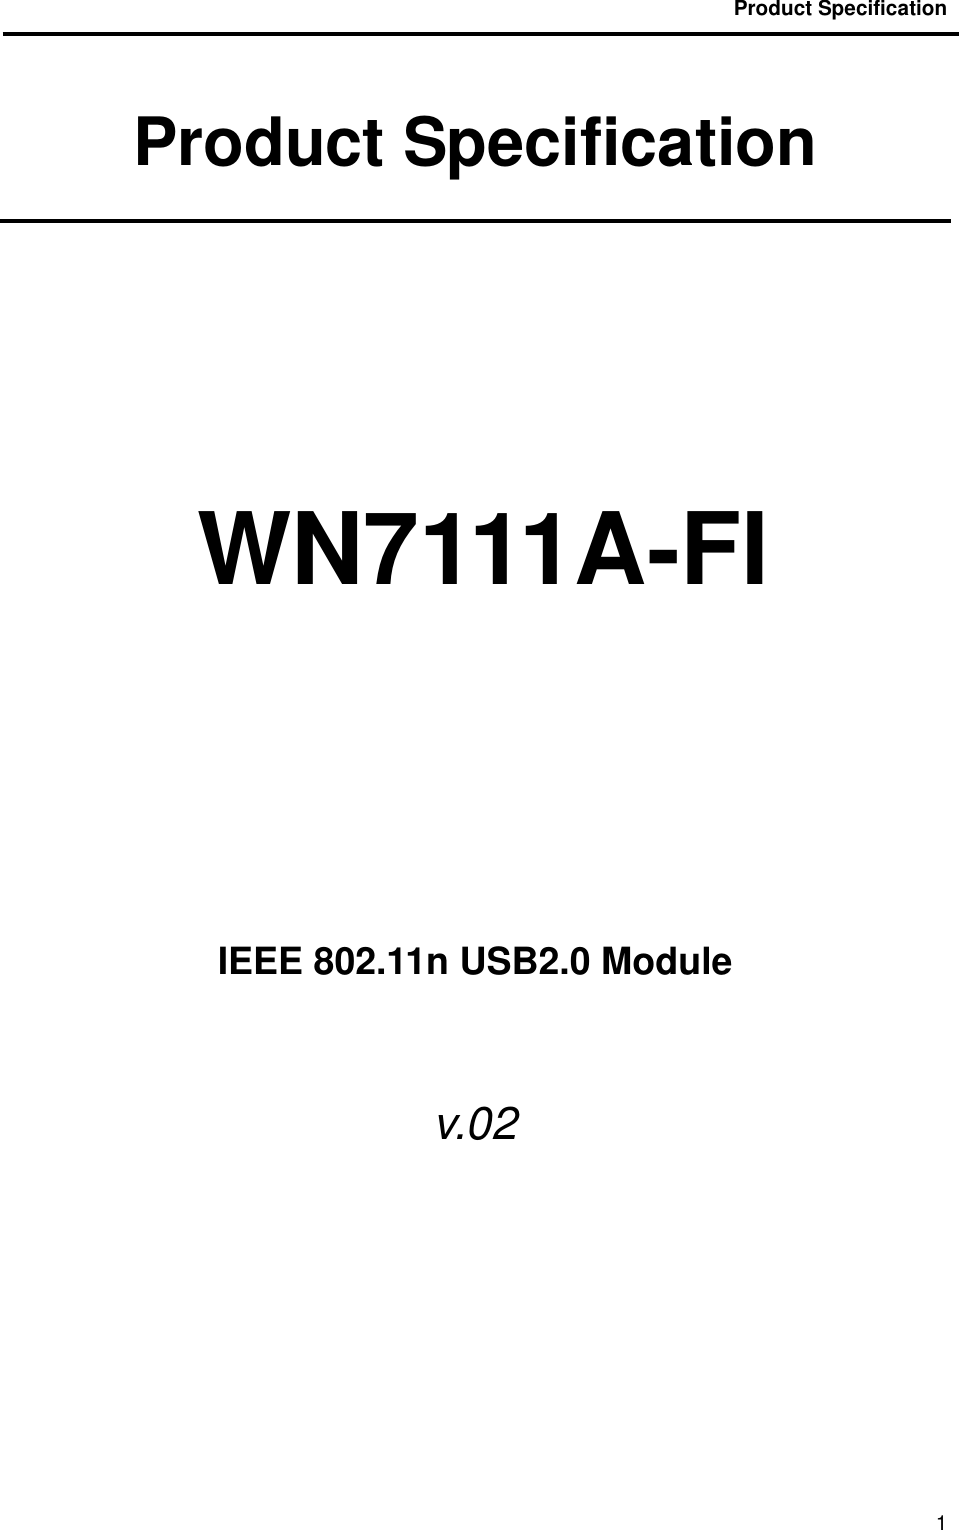                                           Product Specification                                               1 Product Specification       WN7111A-FI         IEEE 802.11n USB2.0 Module  v.02    